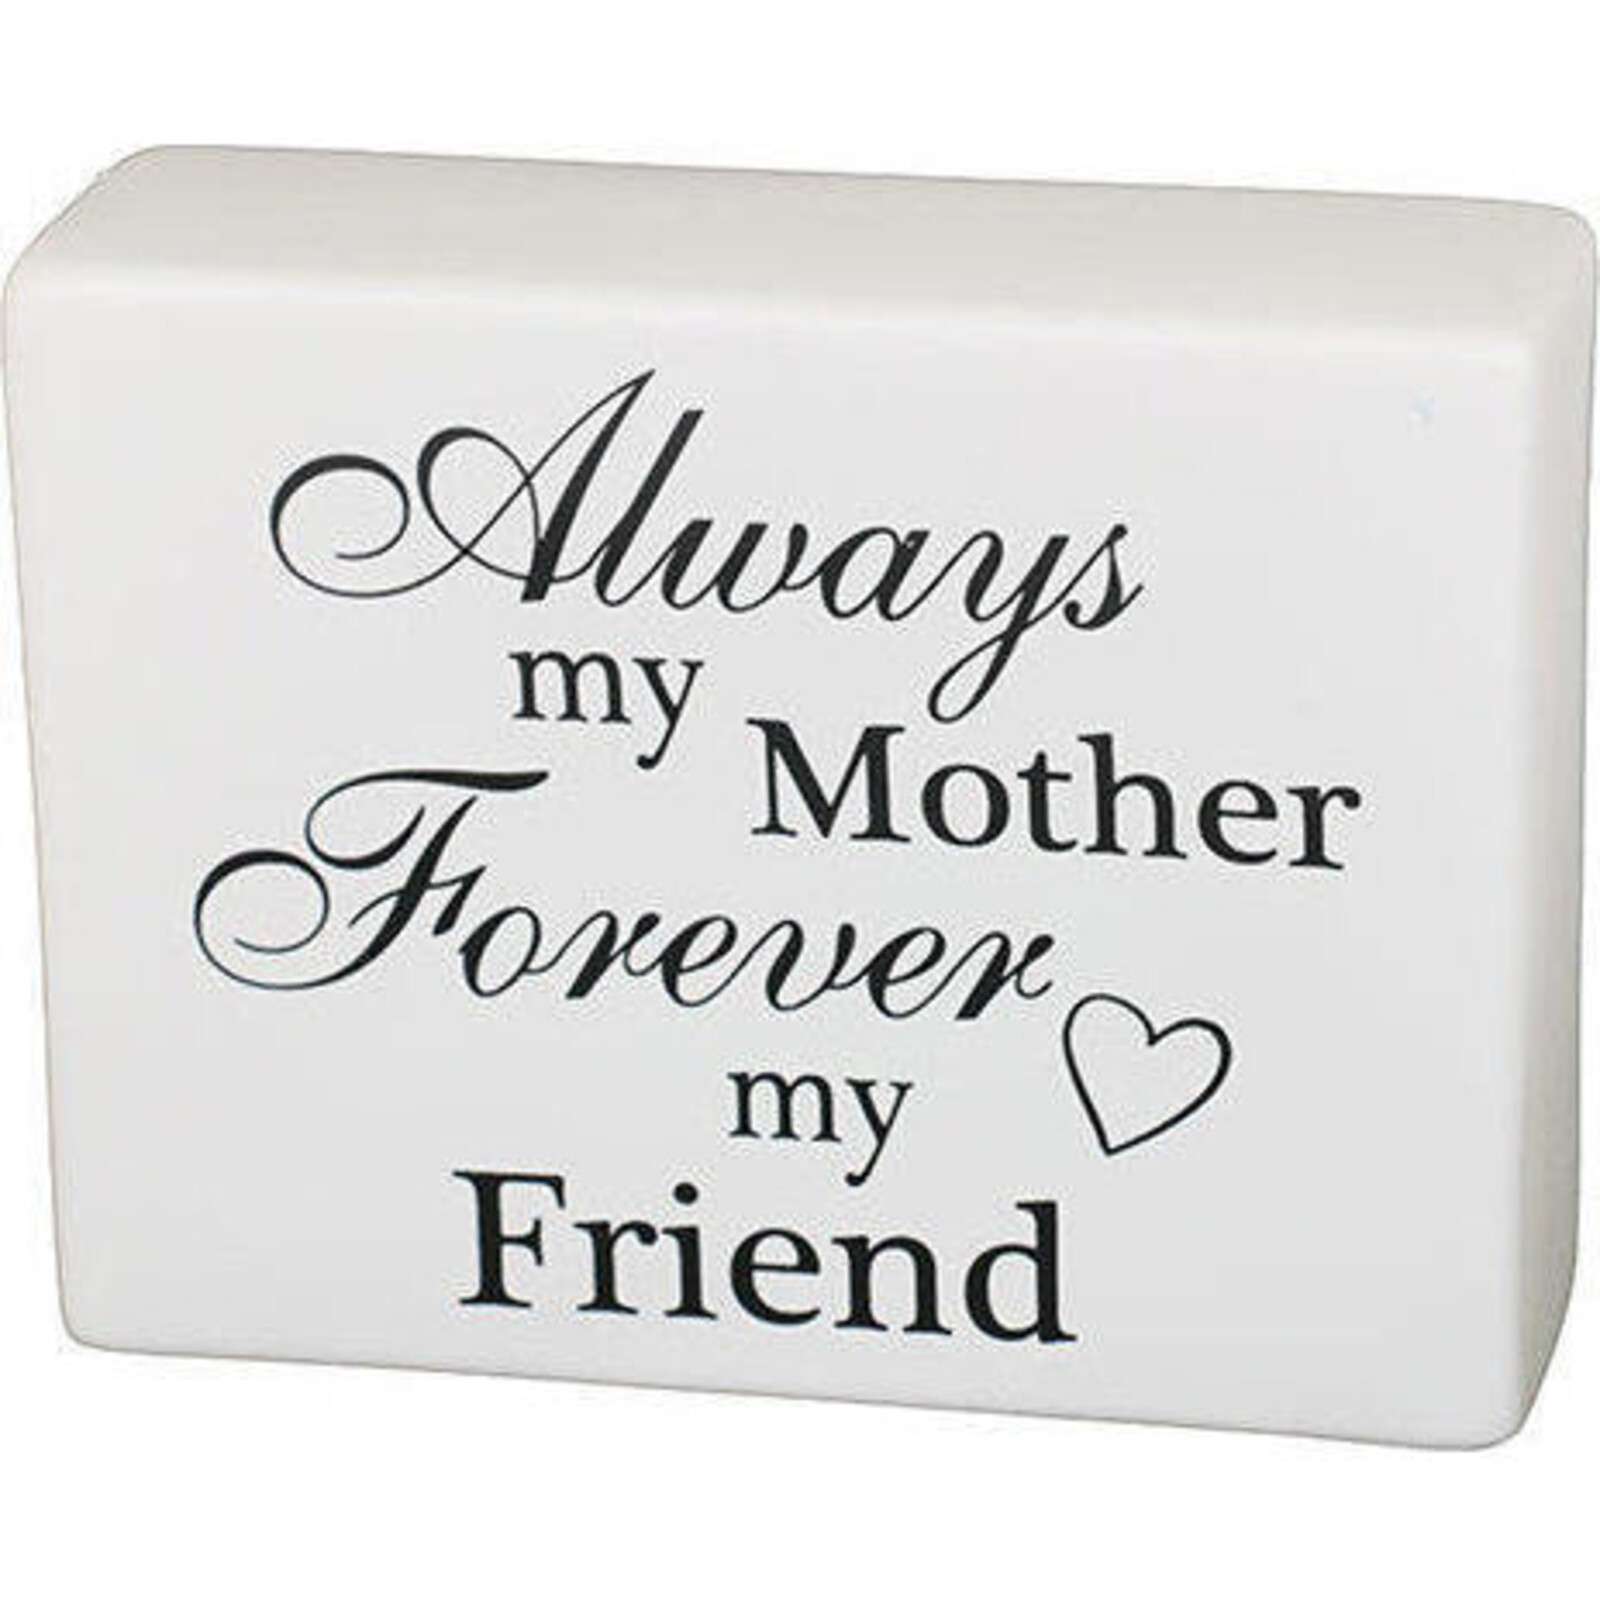 Ceramic Sign Mother Friend